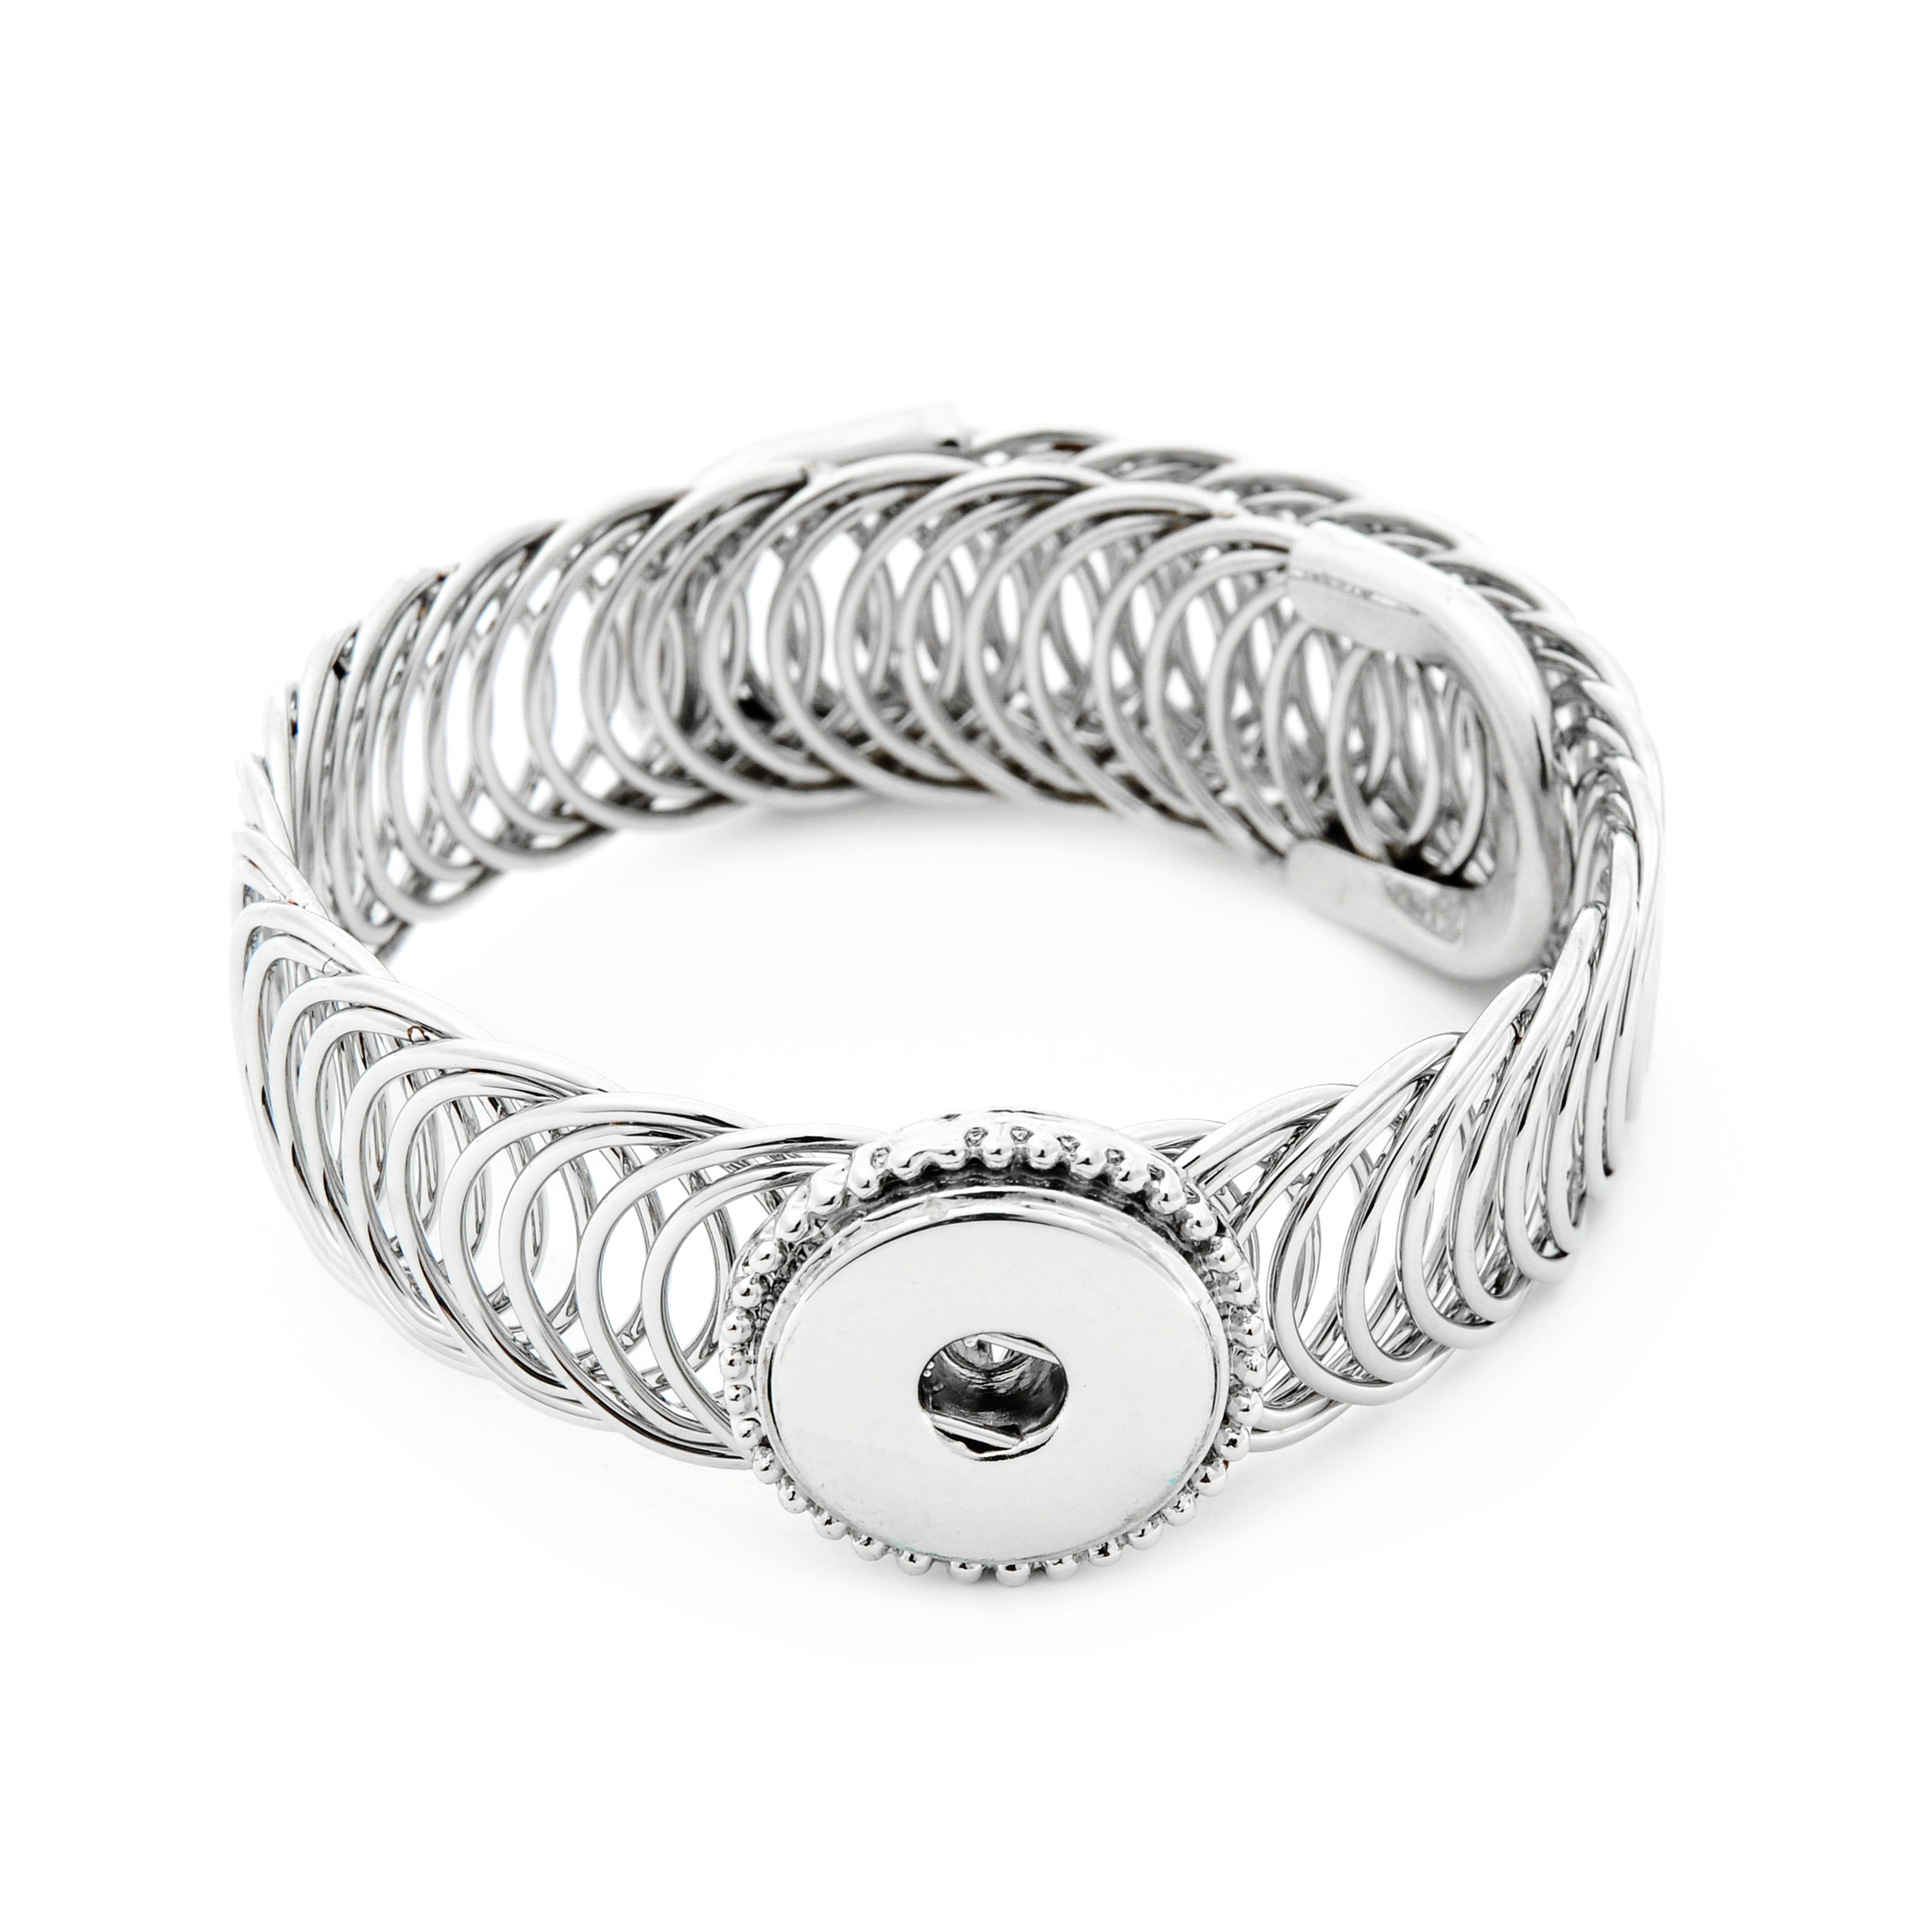 Metal 18mm Snap Button Bracelet Bangles Adjustable Size Rose Gold Silver Color Cuff Bracelet Snaps Jewelry